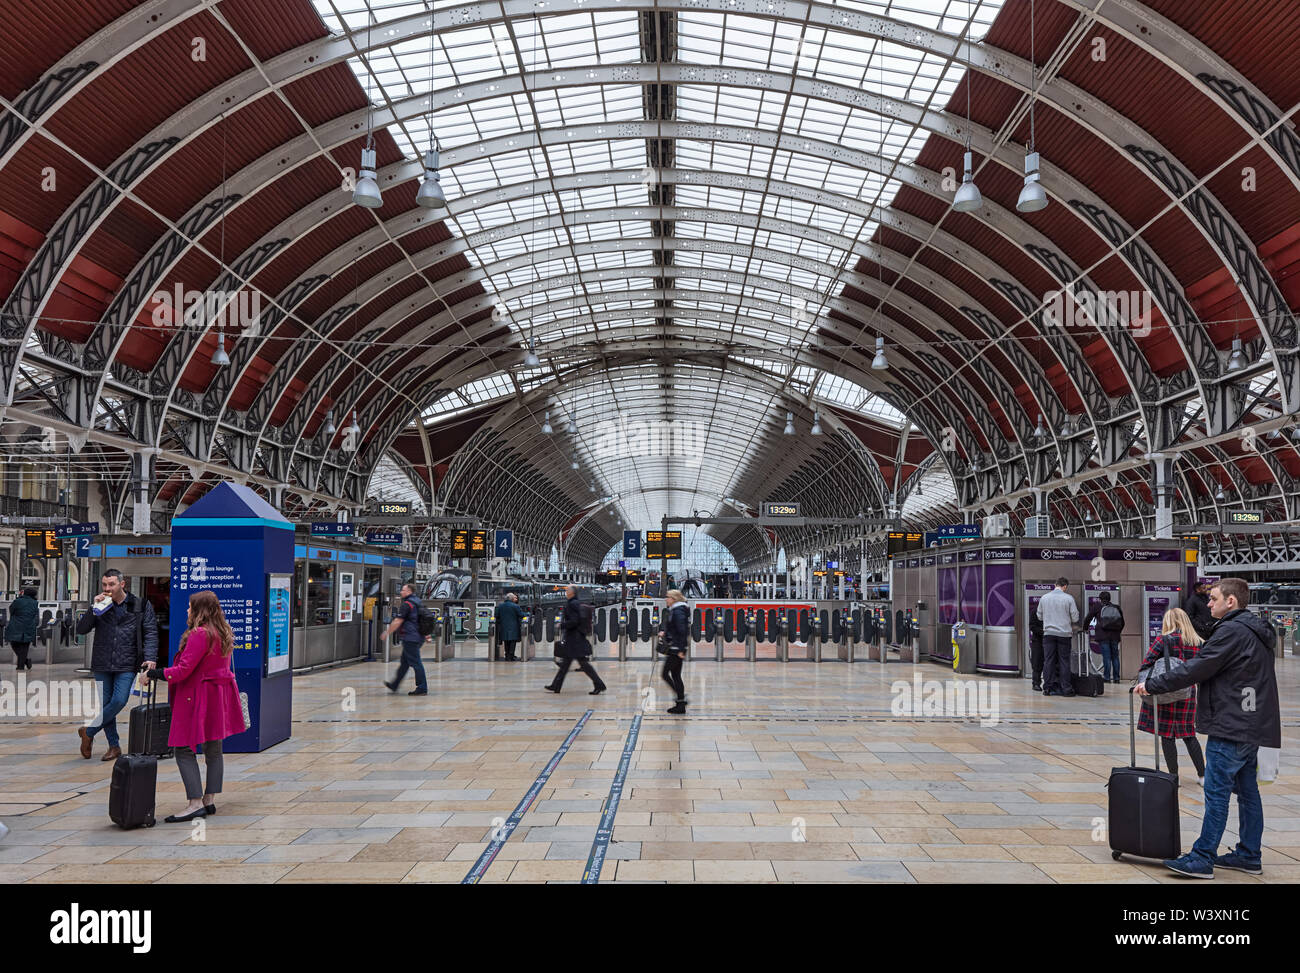 Paddington Station in West London Stockfoto